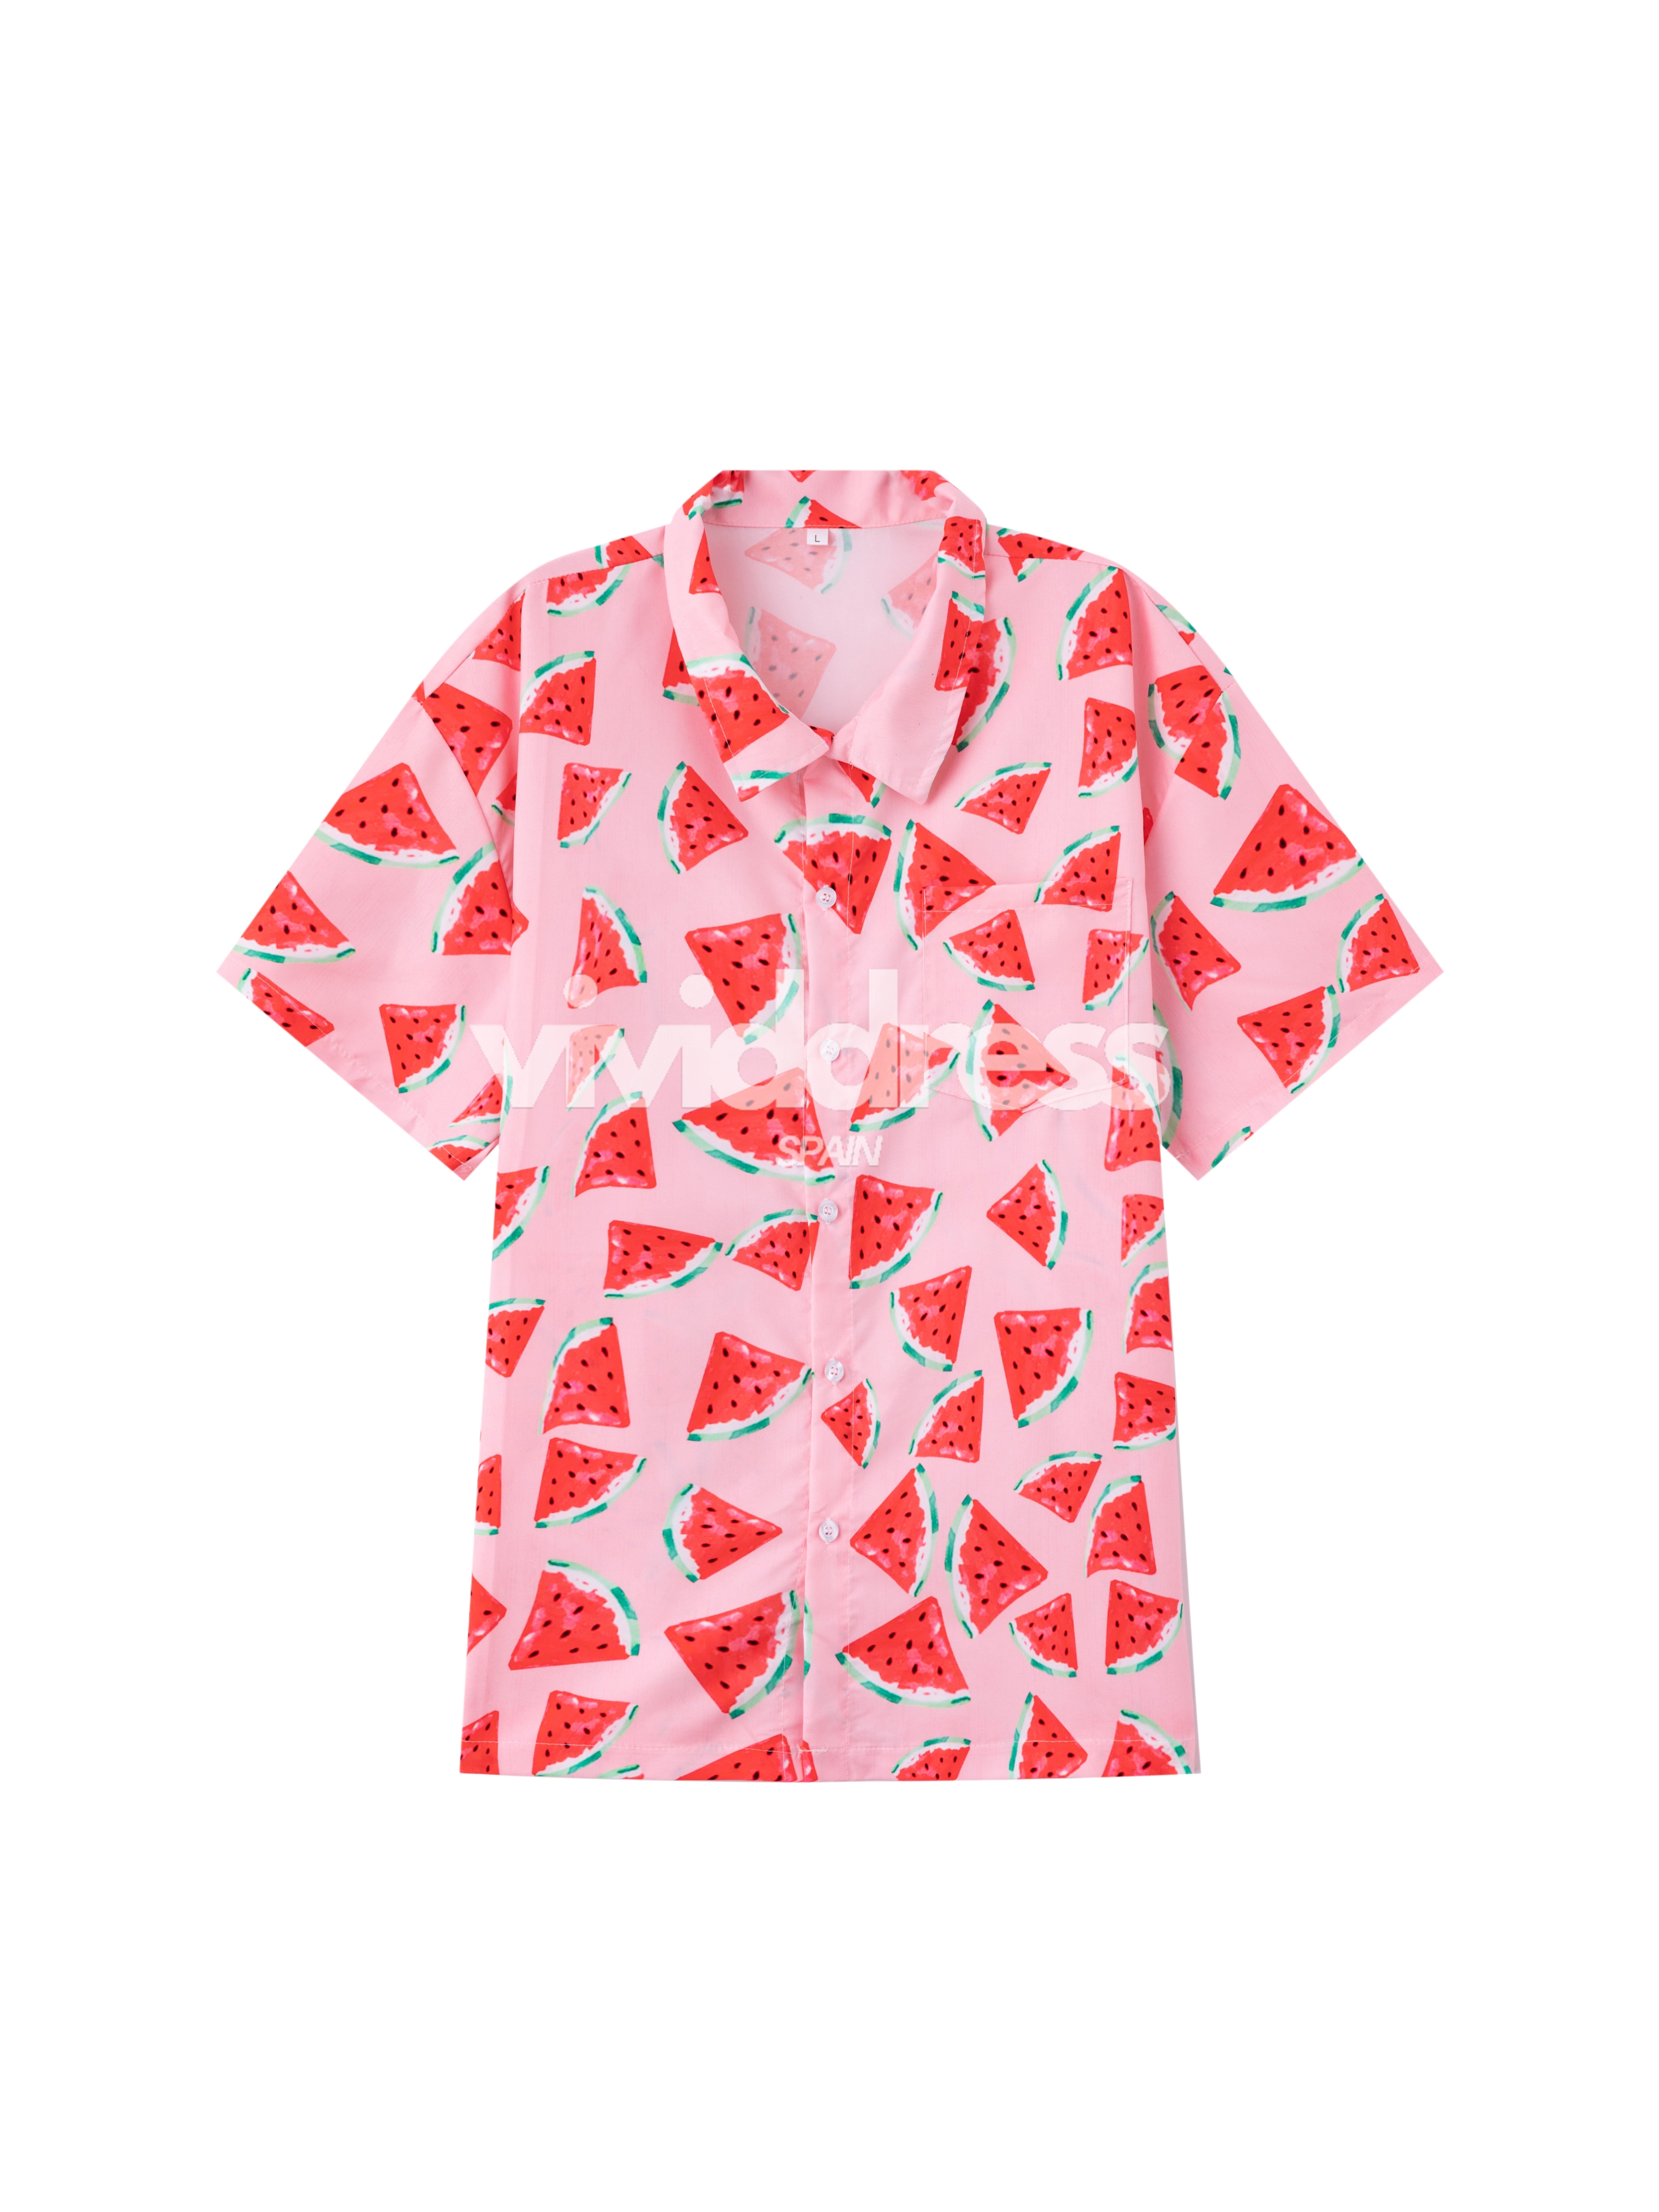 Men's Casual Watermelon Print Beach Summer Holiday Short Sleeve Shirt